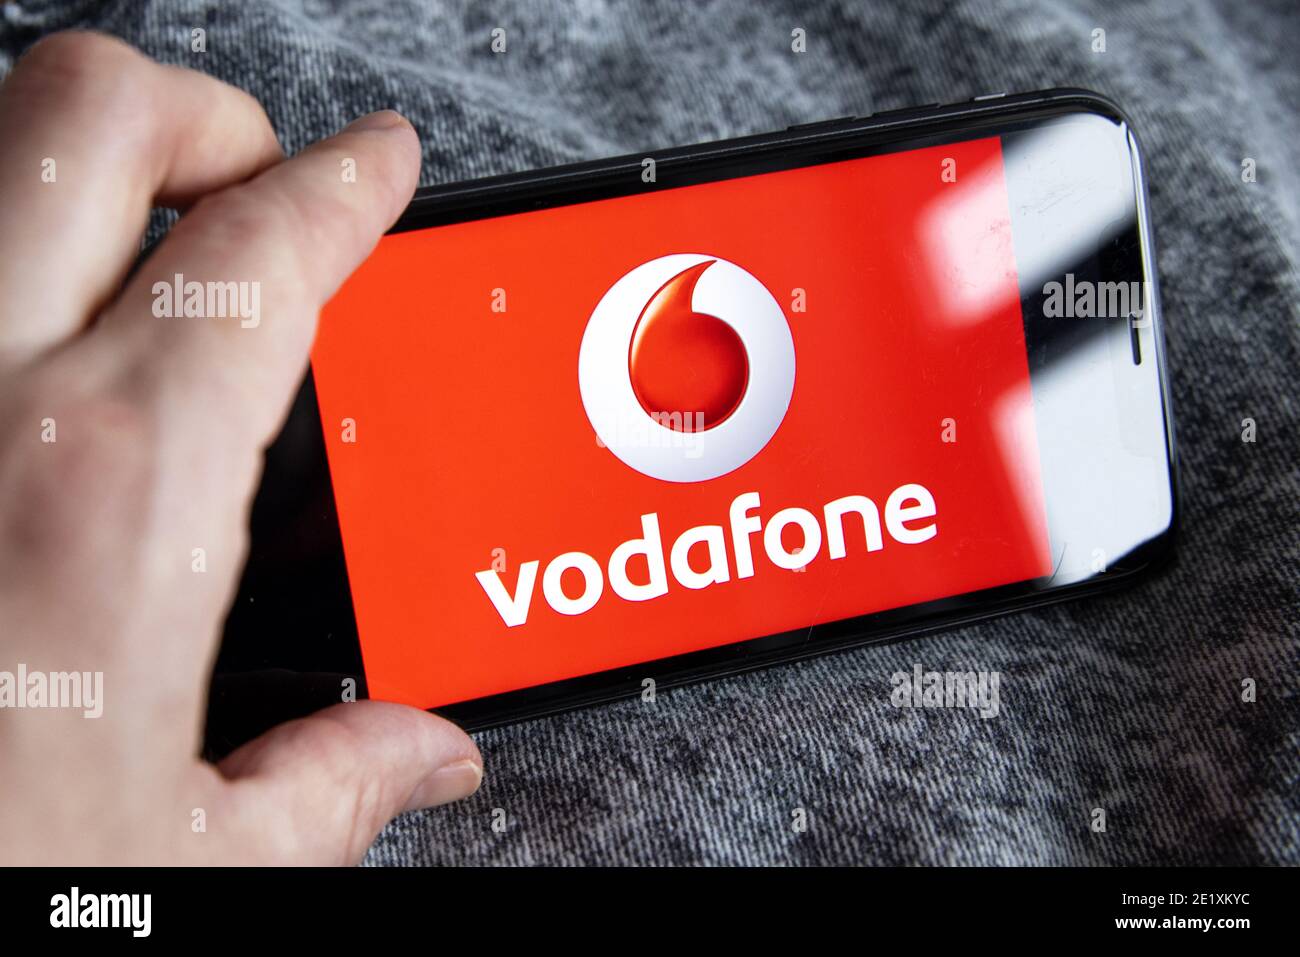 Vodafone a largest telecommunication company. Hand holding iPhone 11 with Vodafone logo. Stock Photo